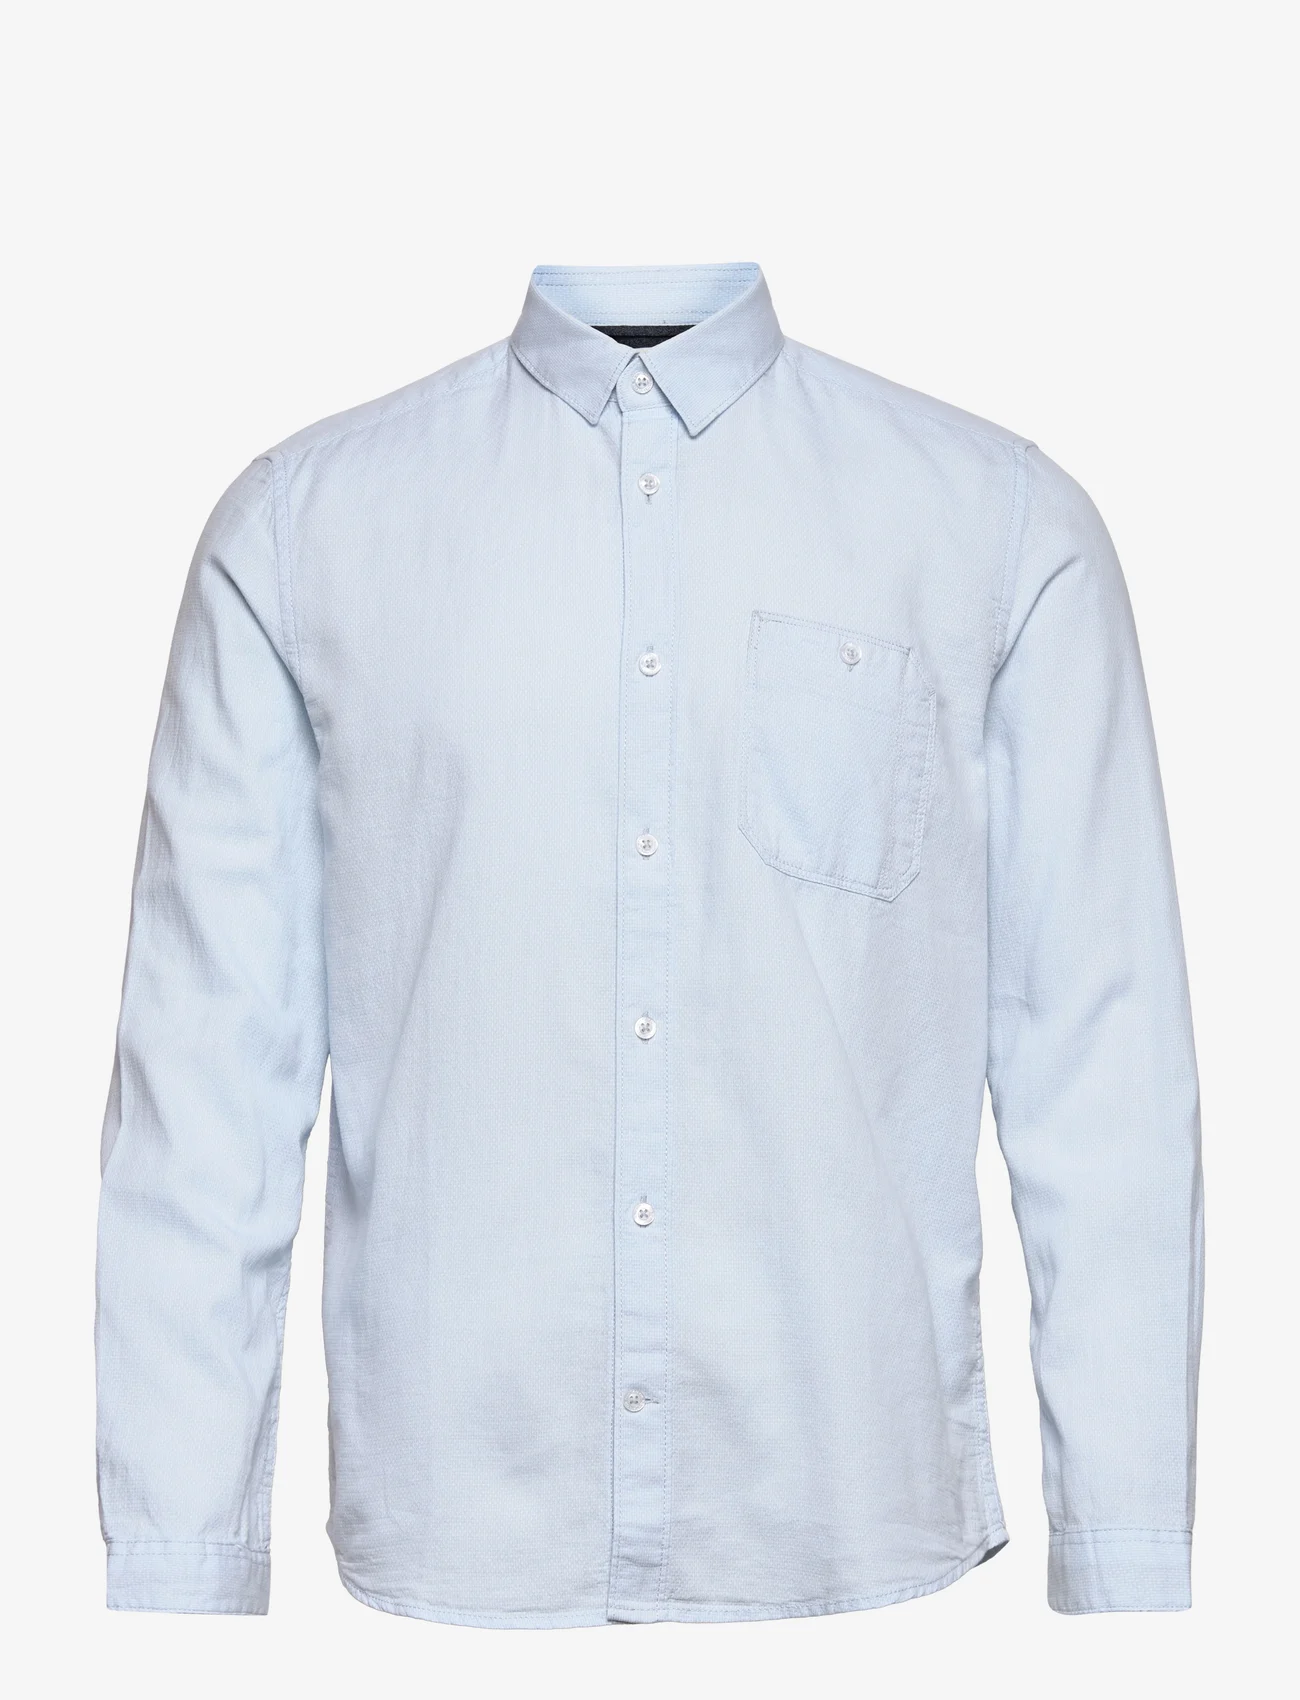 Tom Tailor - structured shirt - basic skjortor - light blue white structure - 0